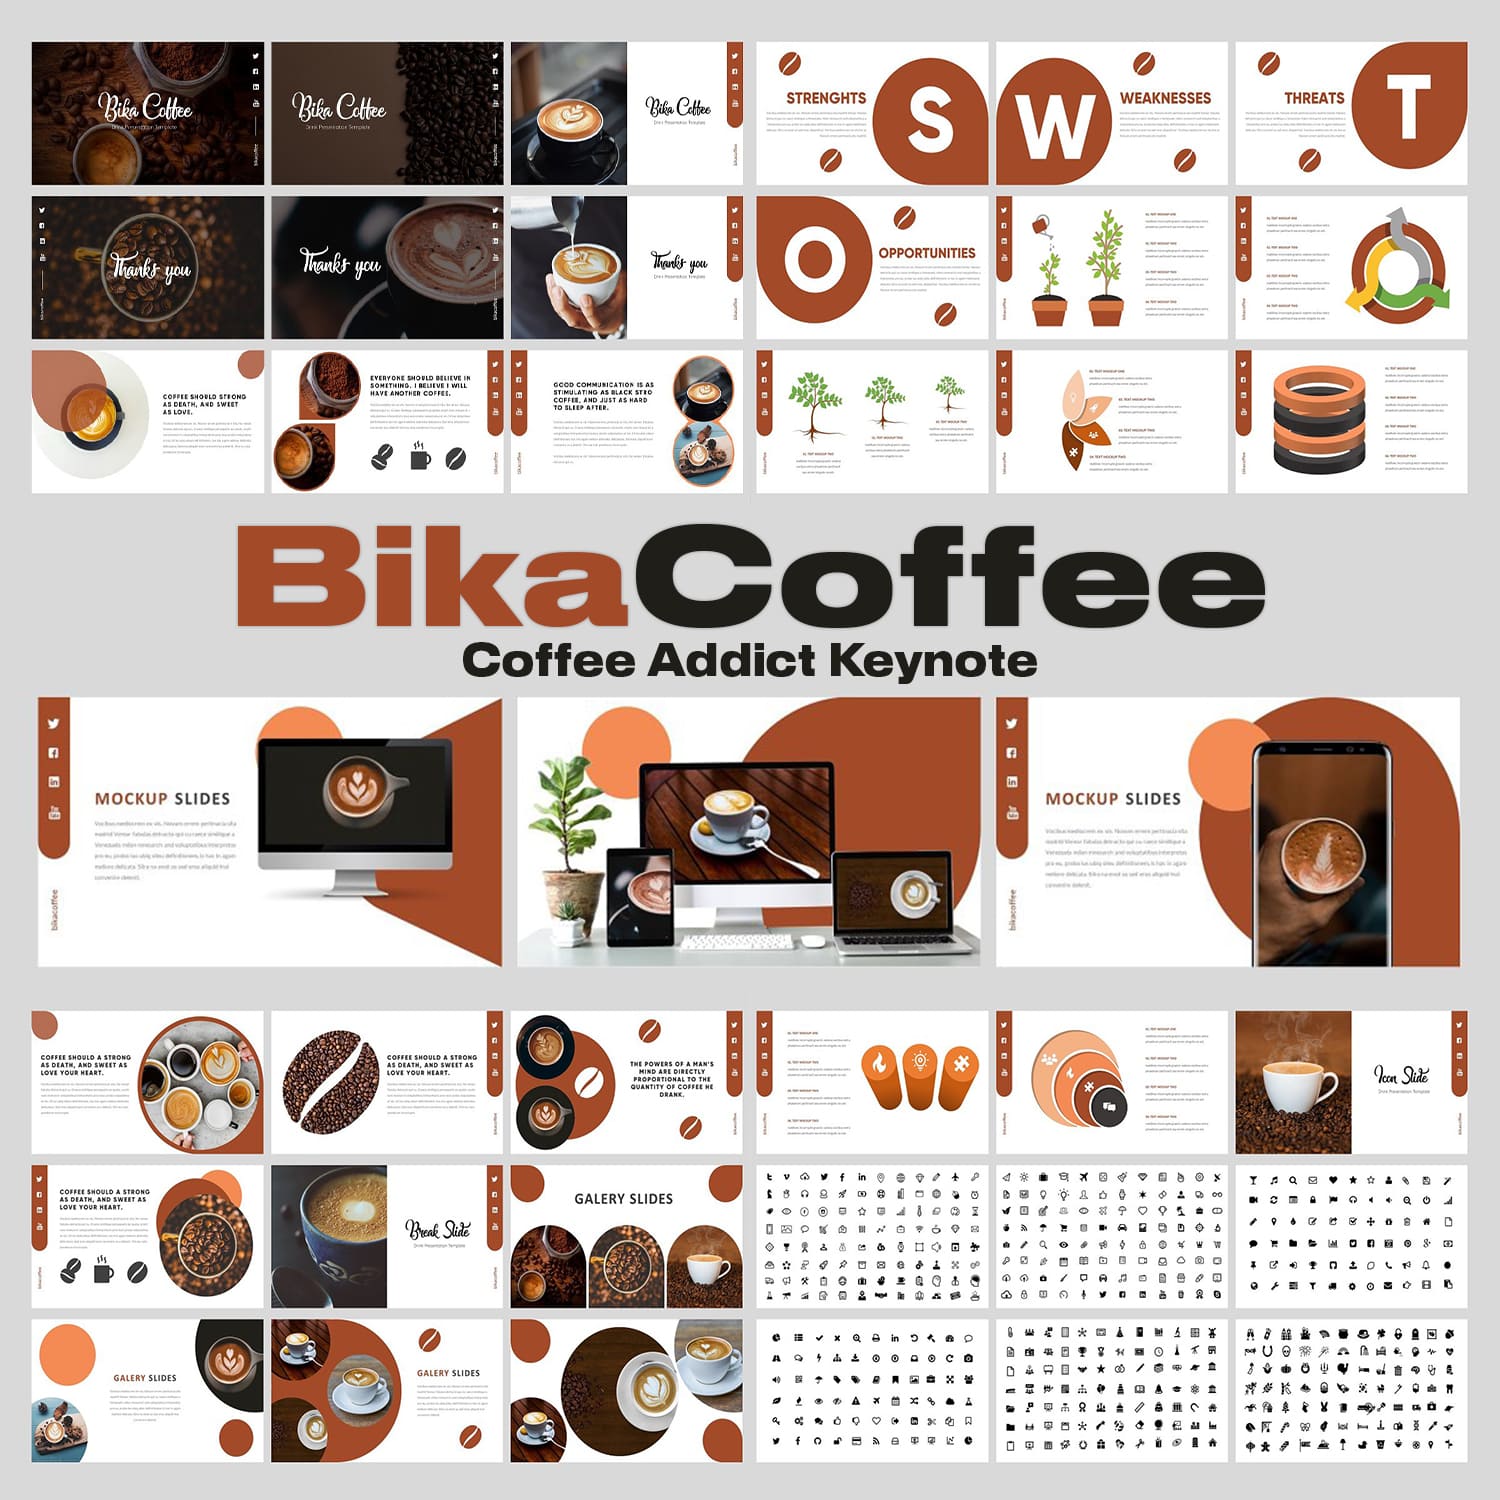 Bika Coffee - Coffee Addict Keynote main cover.